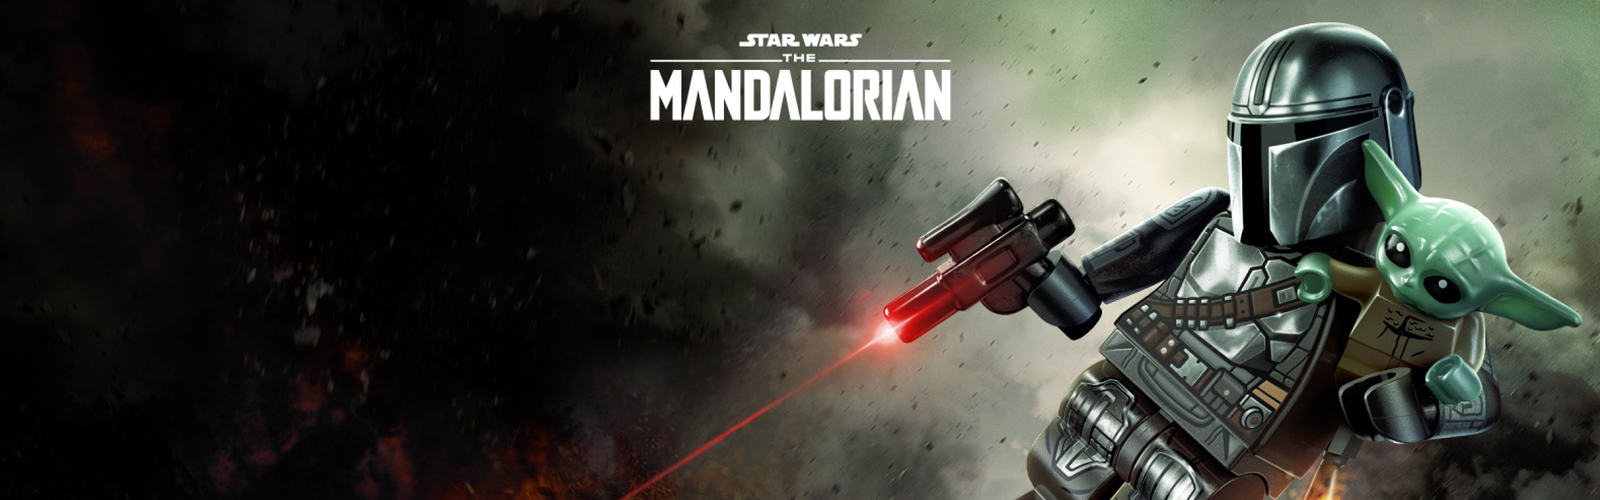 The Mandalorian™, Star Wars™